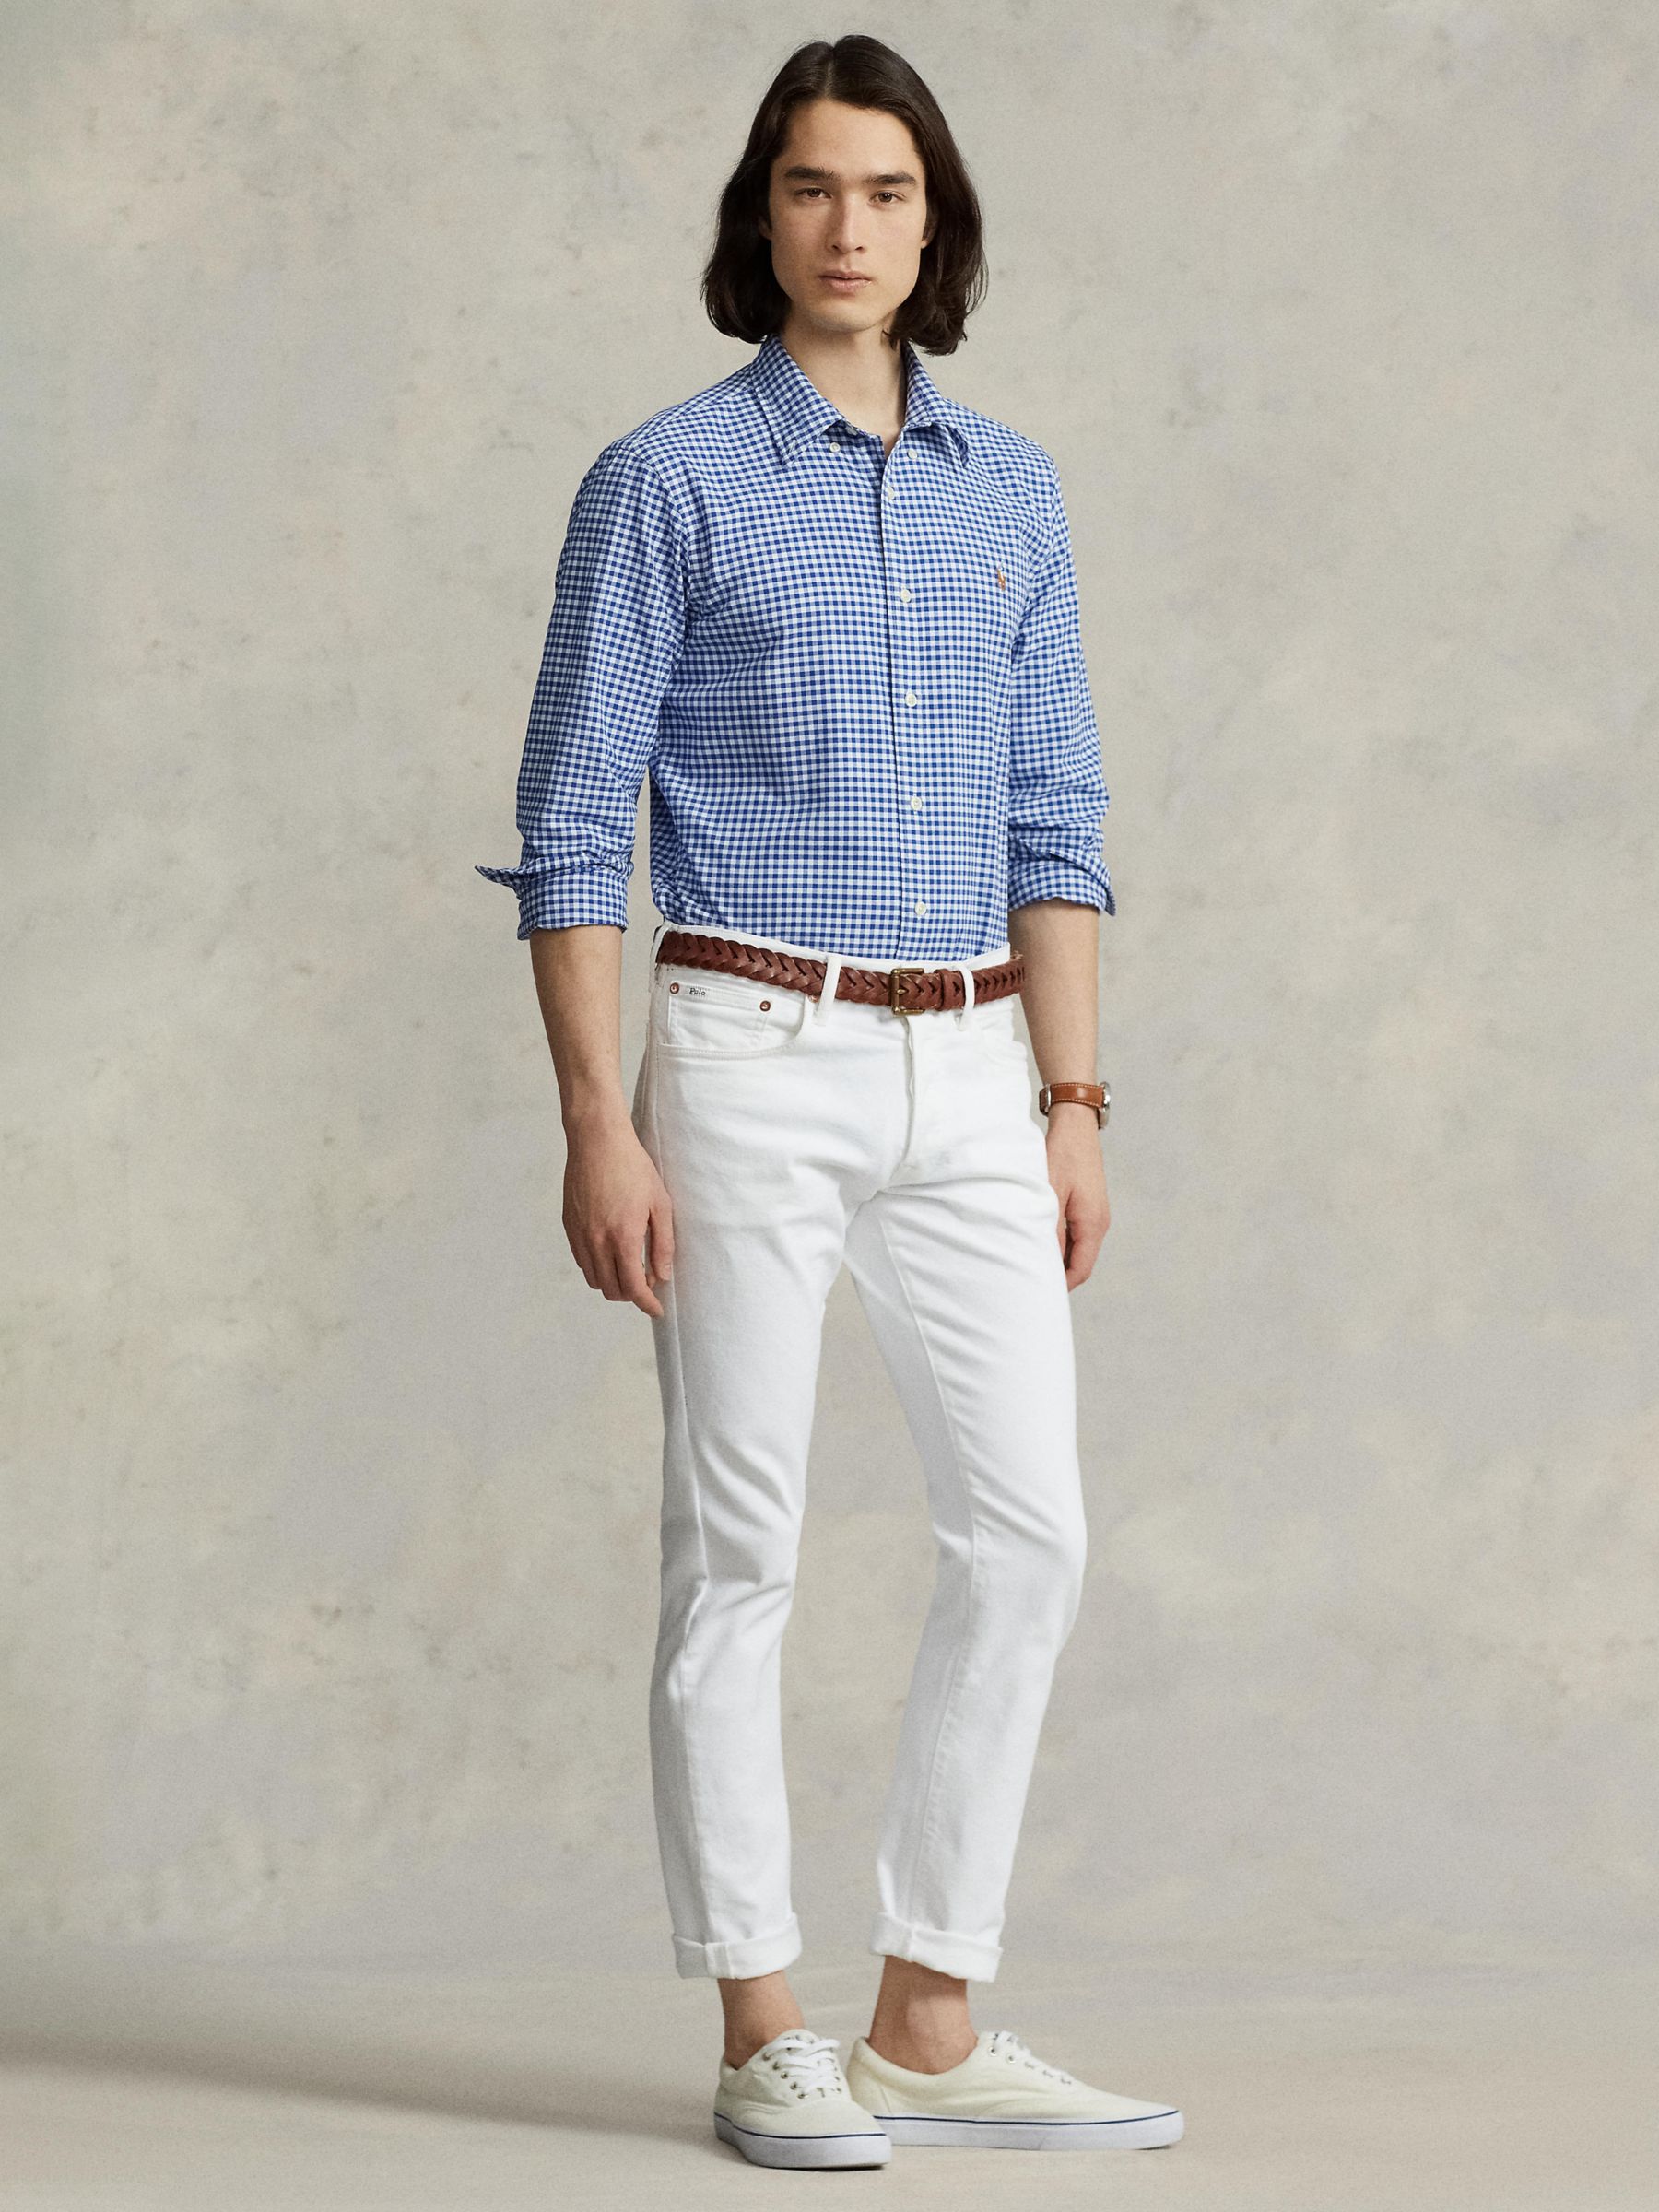 Polo Ralph Lauren Custom Fit Oxford Shirt, Gingham Blue / White, S